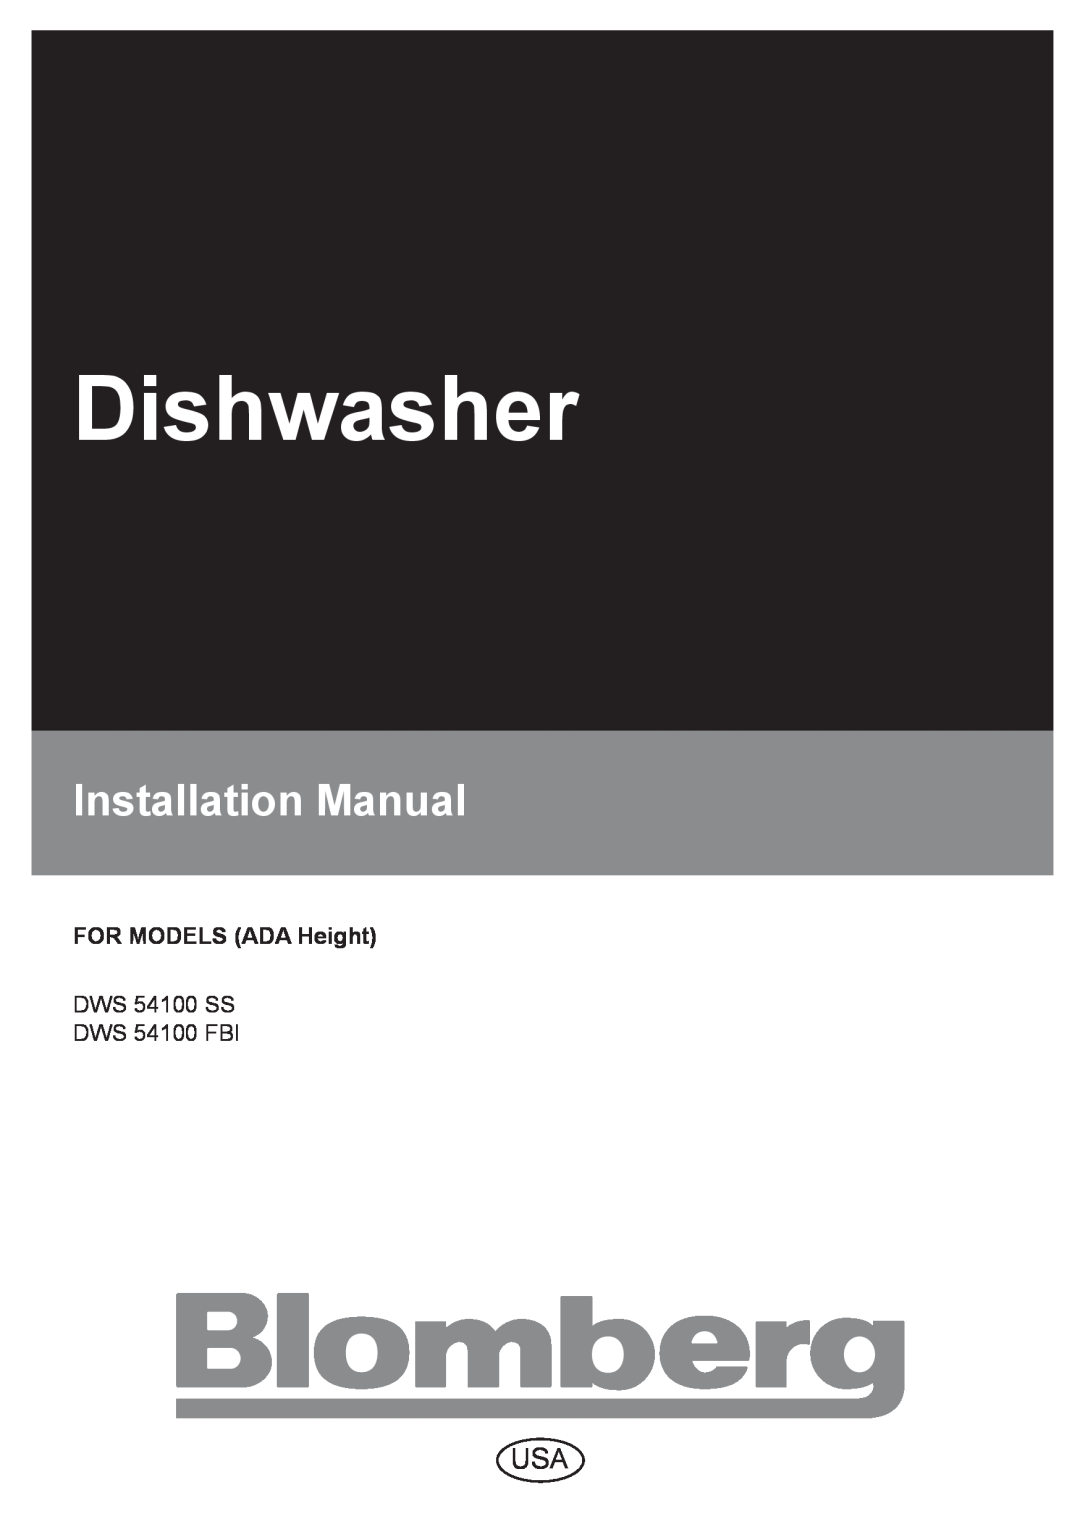 Blomberg DWS 54100 FBI, DWS 54100 SS installation manual Dishwasher, Installation Manual 